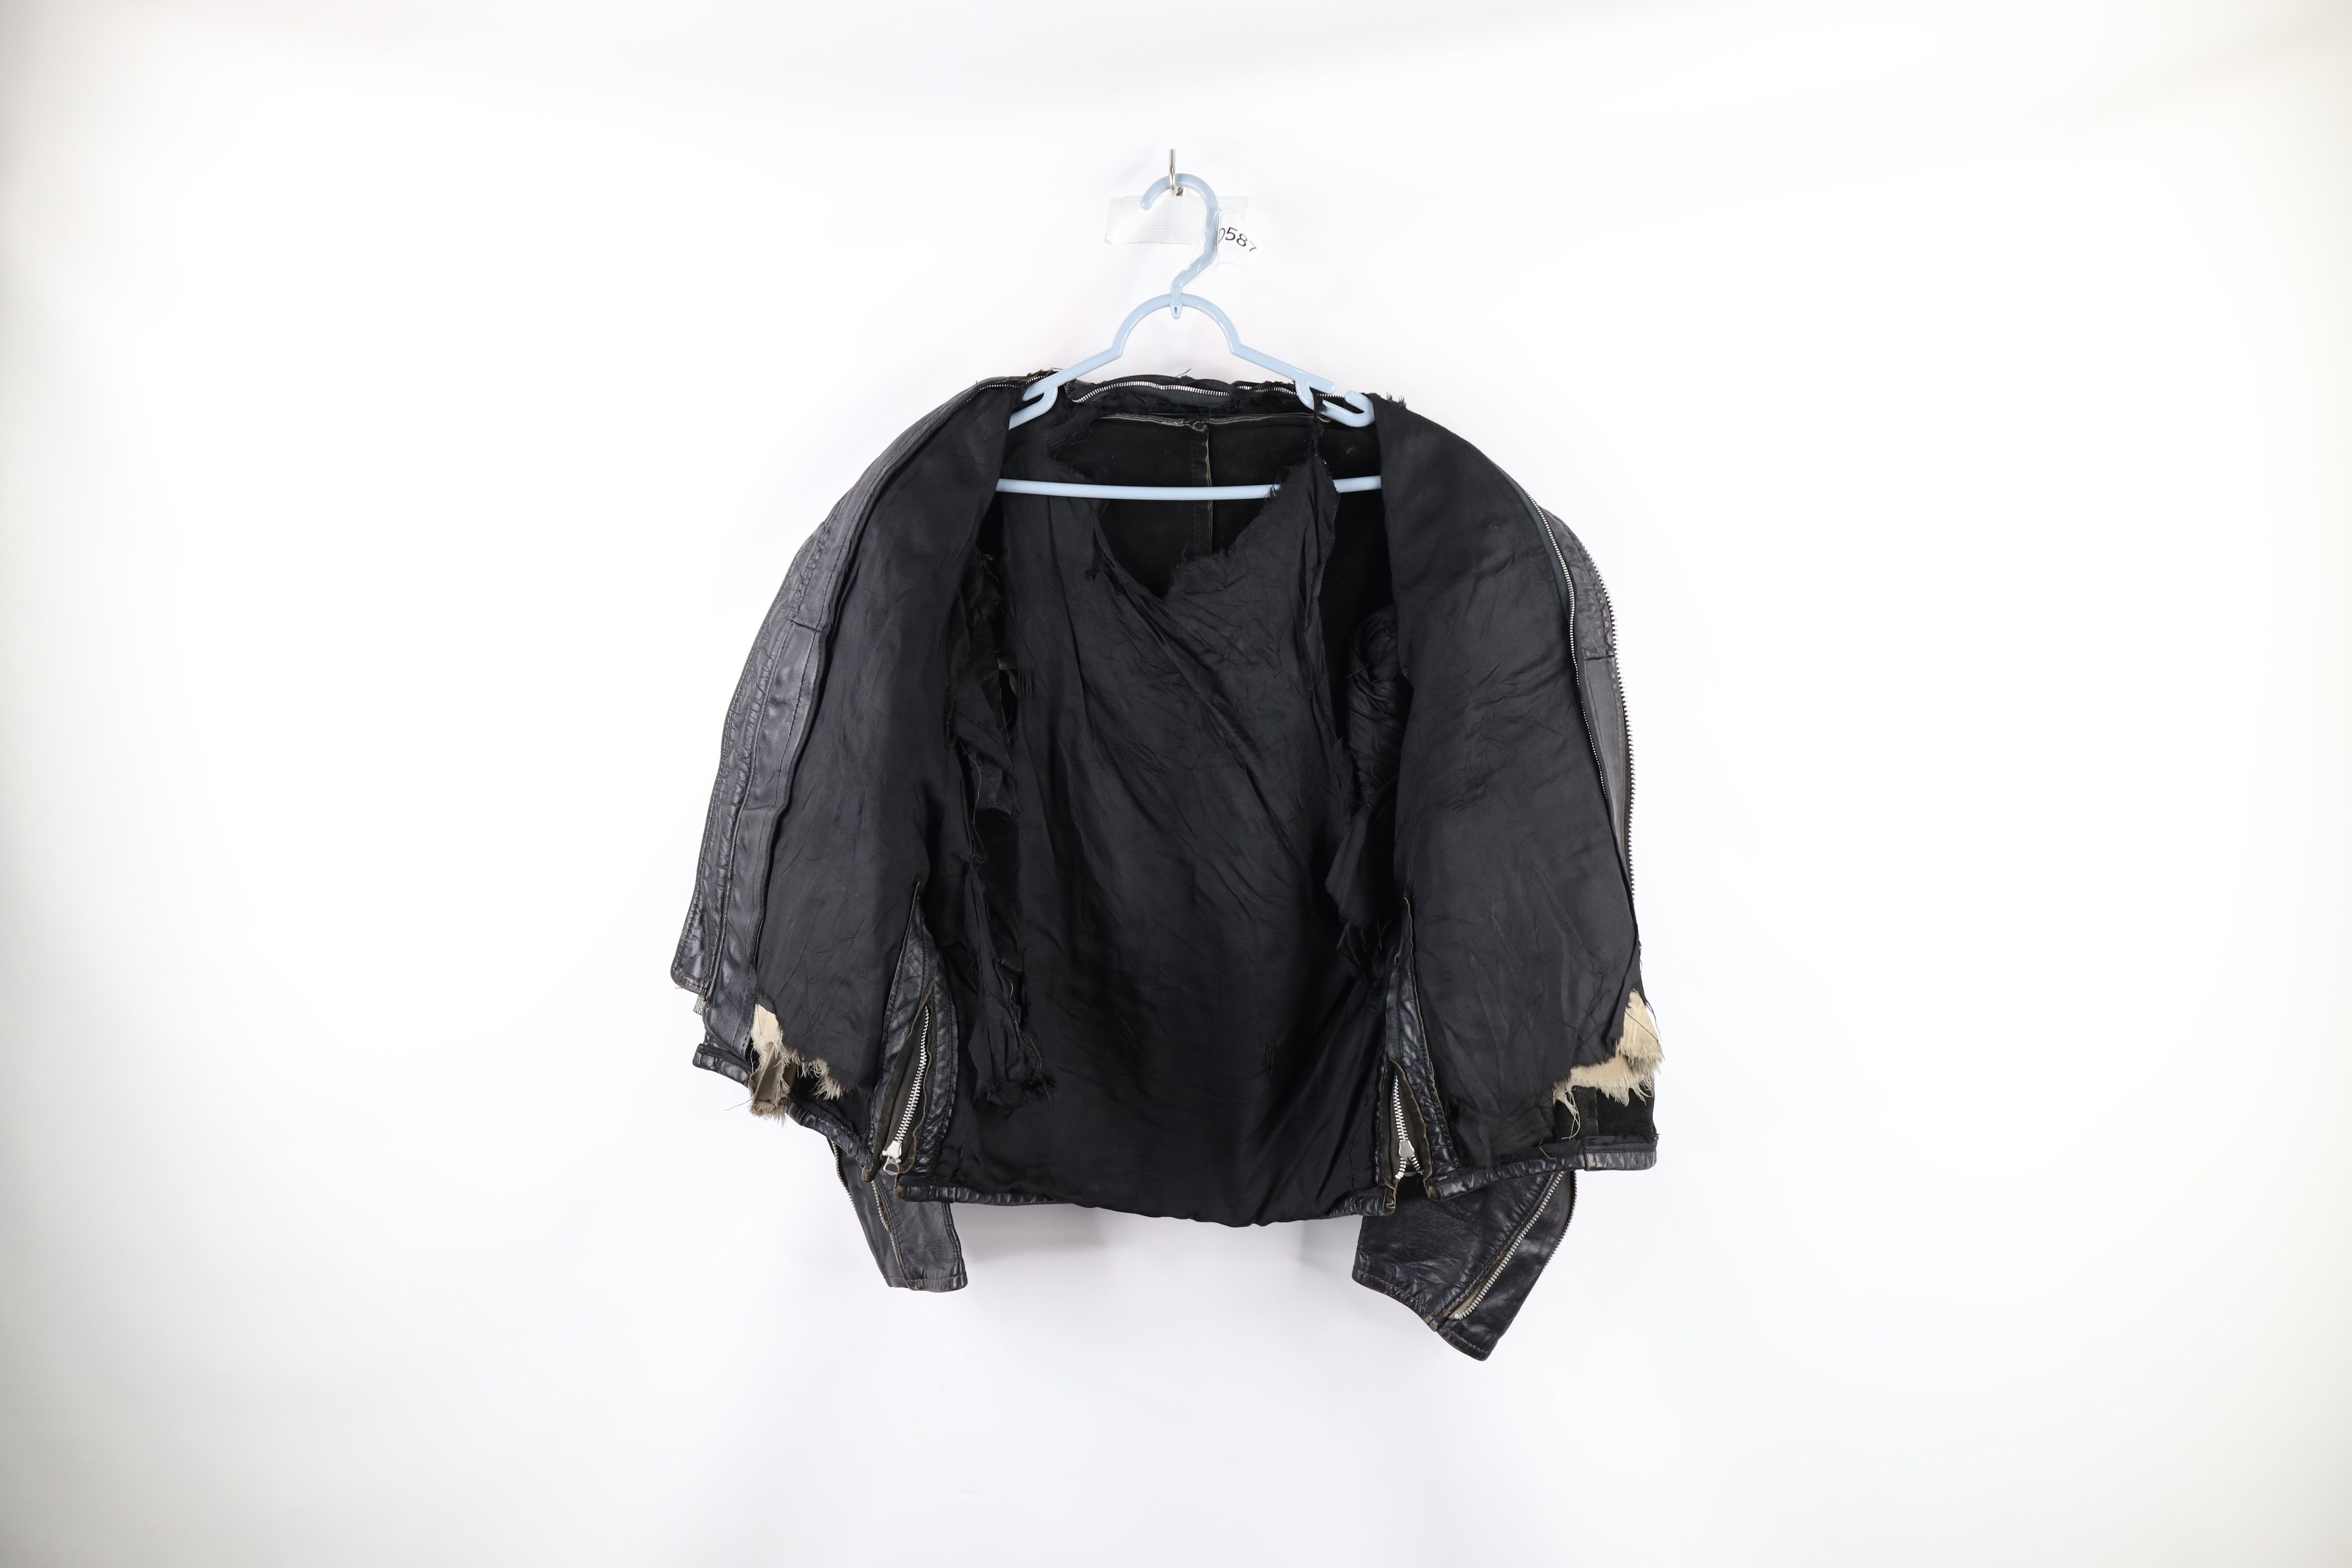 Vintage Vintage 70s Leather Cafe Racer Motorcycle Jacket Black USA Size US L / EU 52-54 / 3 - 8 Thumbnail